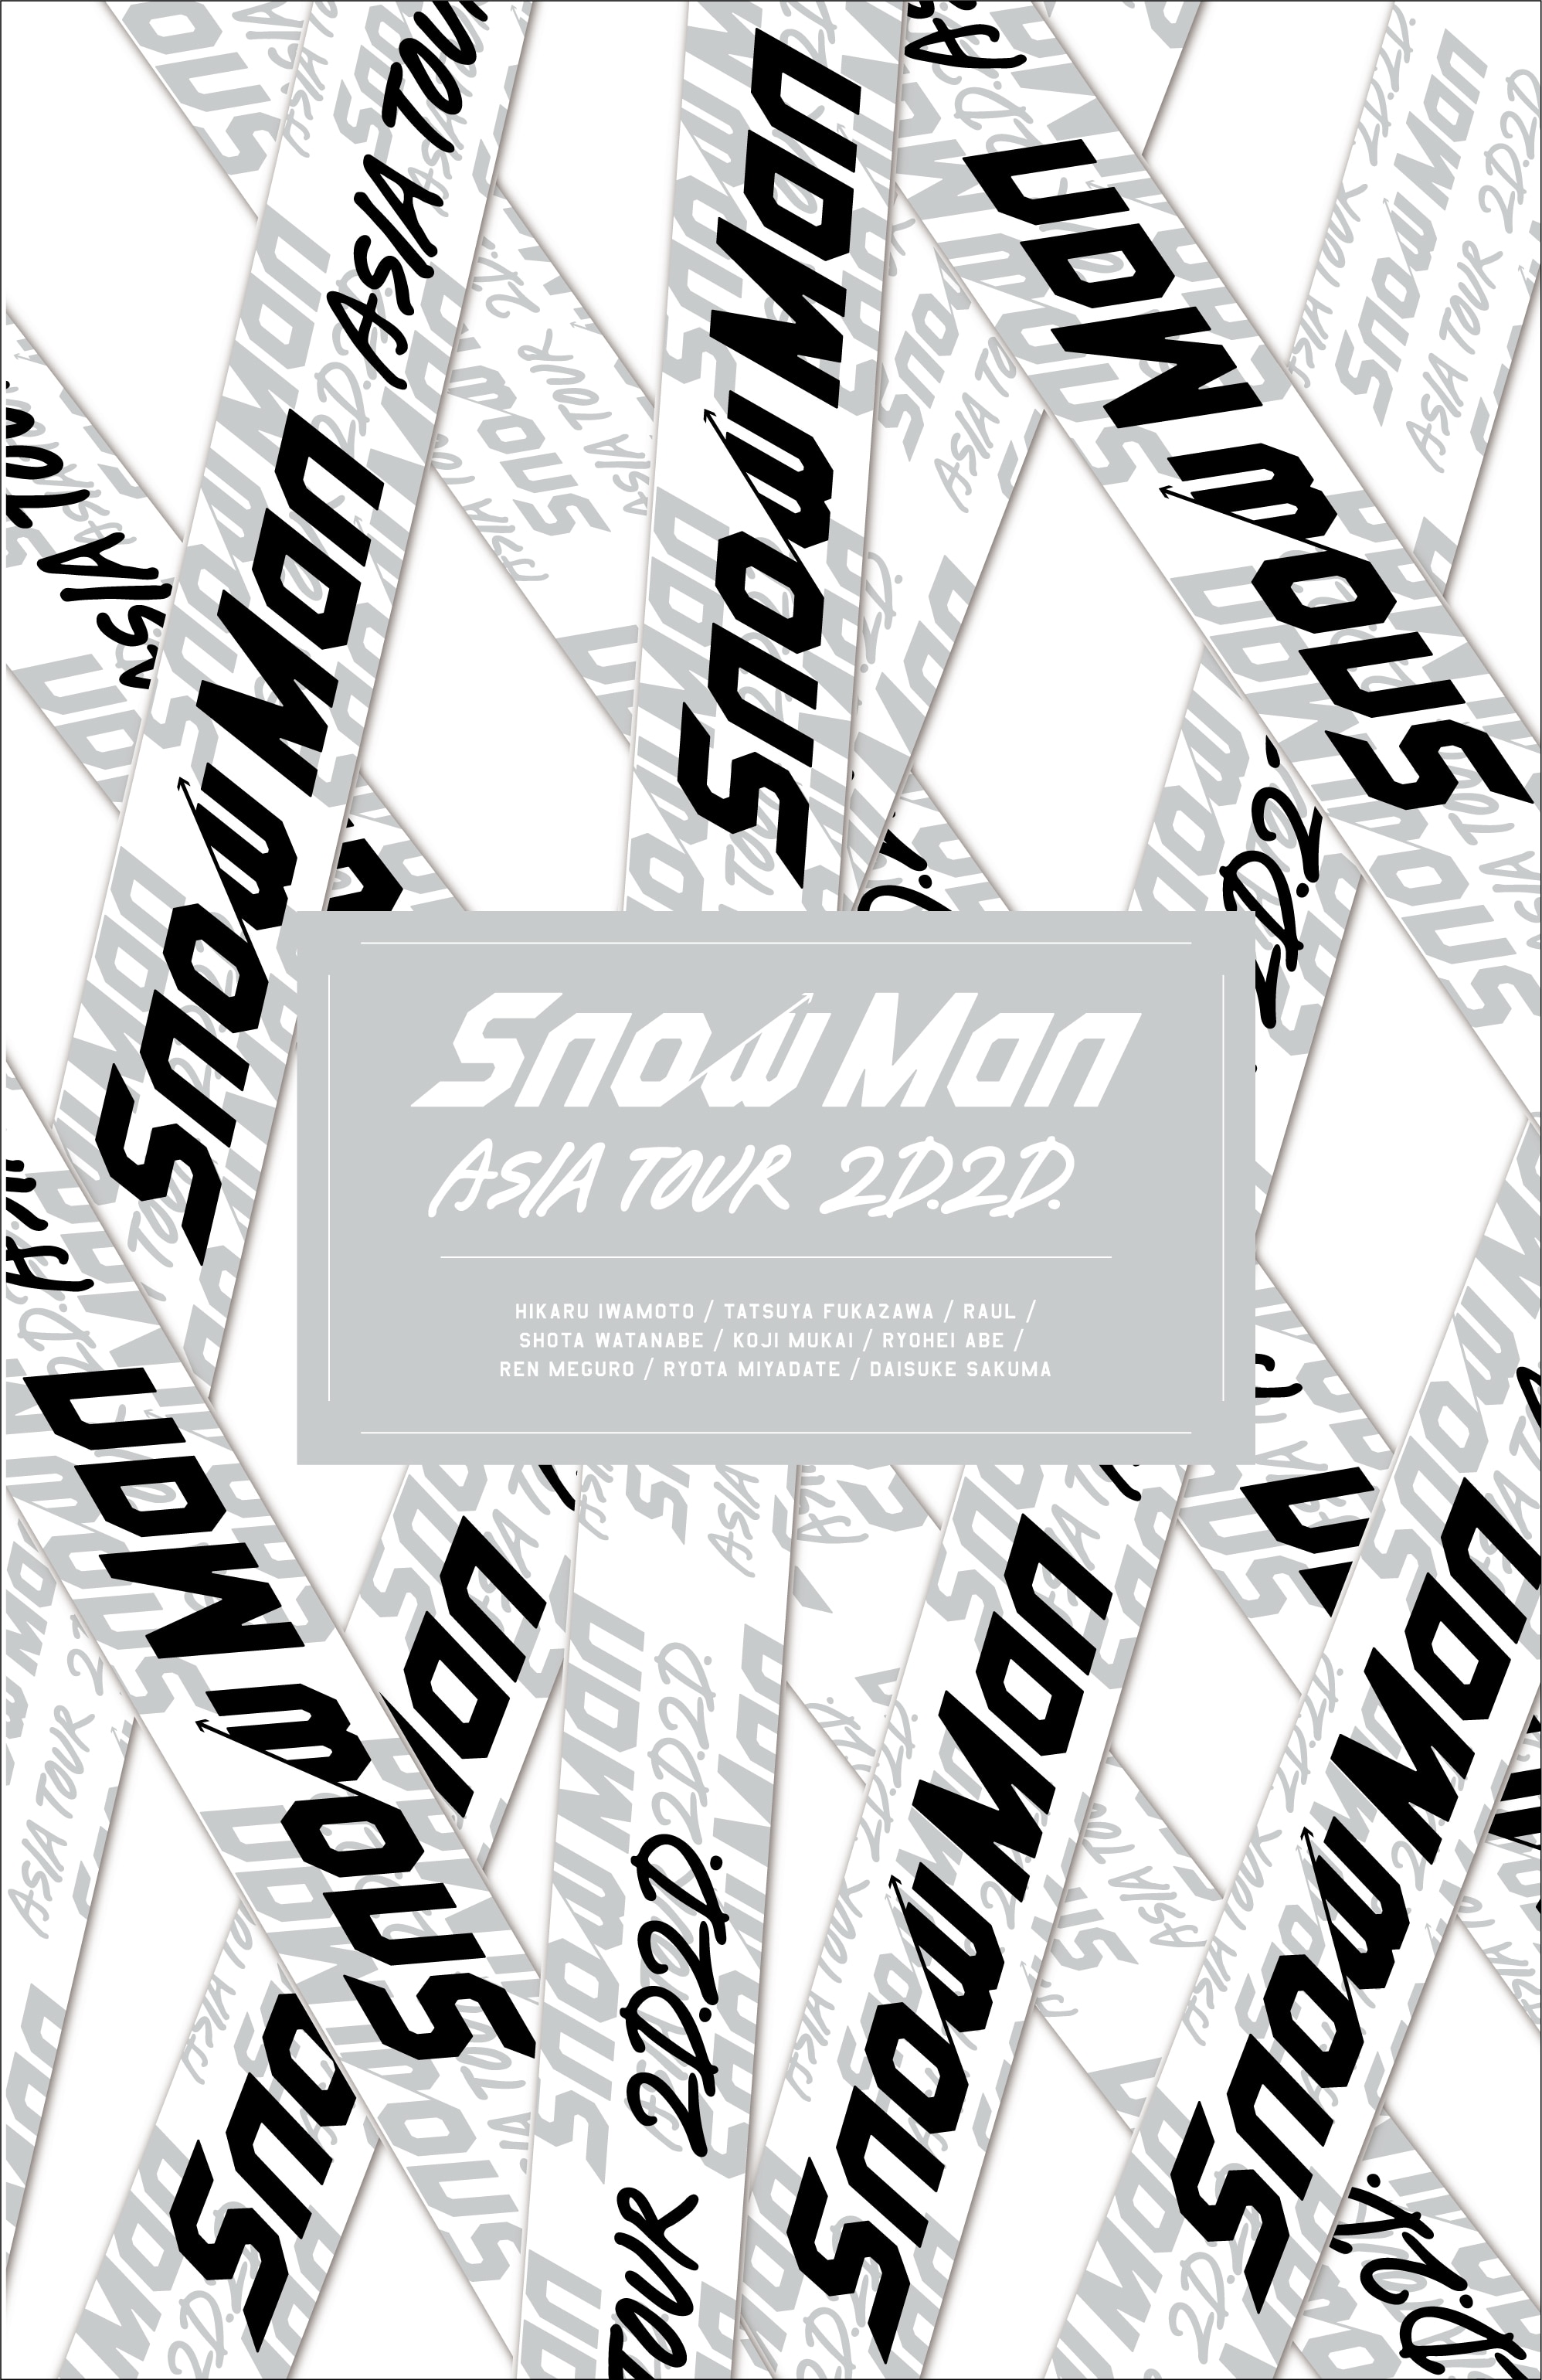 LIVE DVD&Blu-ray 「Snow Man ASIA TOUR 2D.2D.」 - DISC | Snow Man